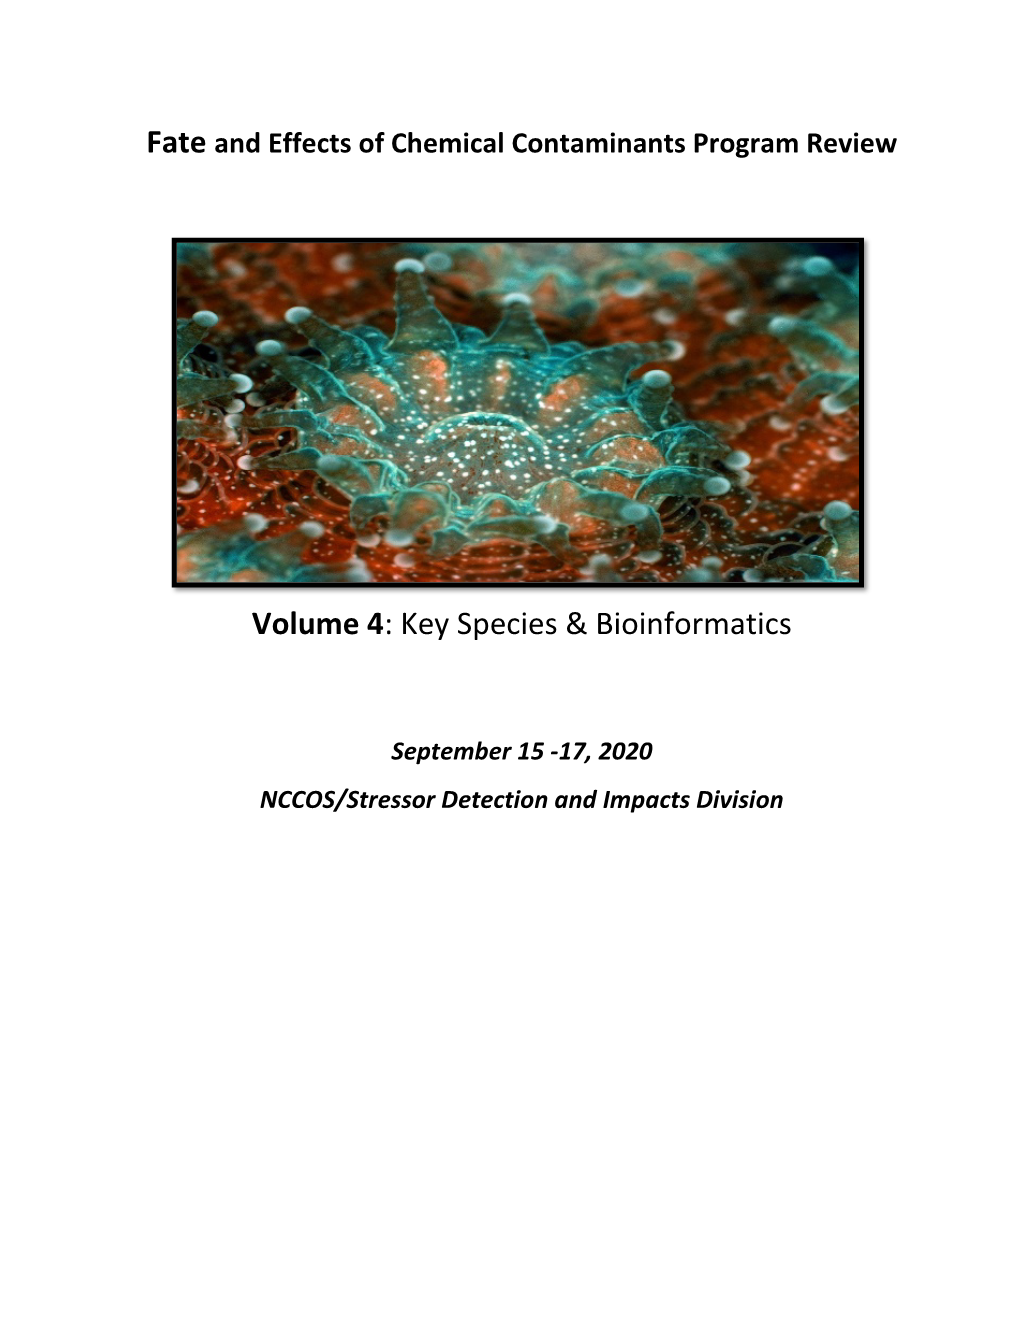 Key Species & Bioinformatics